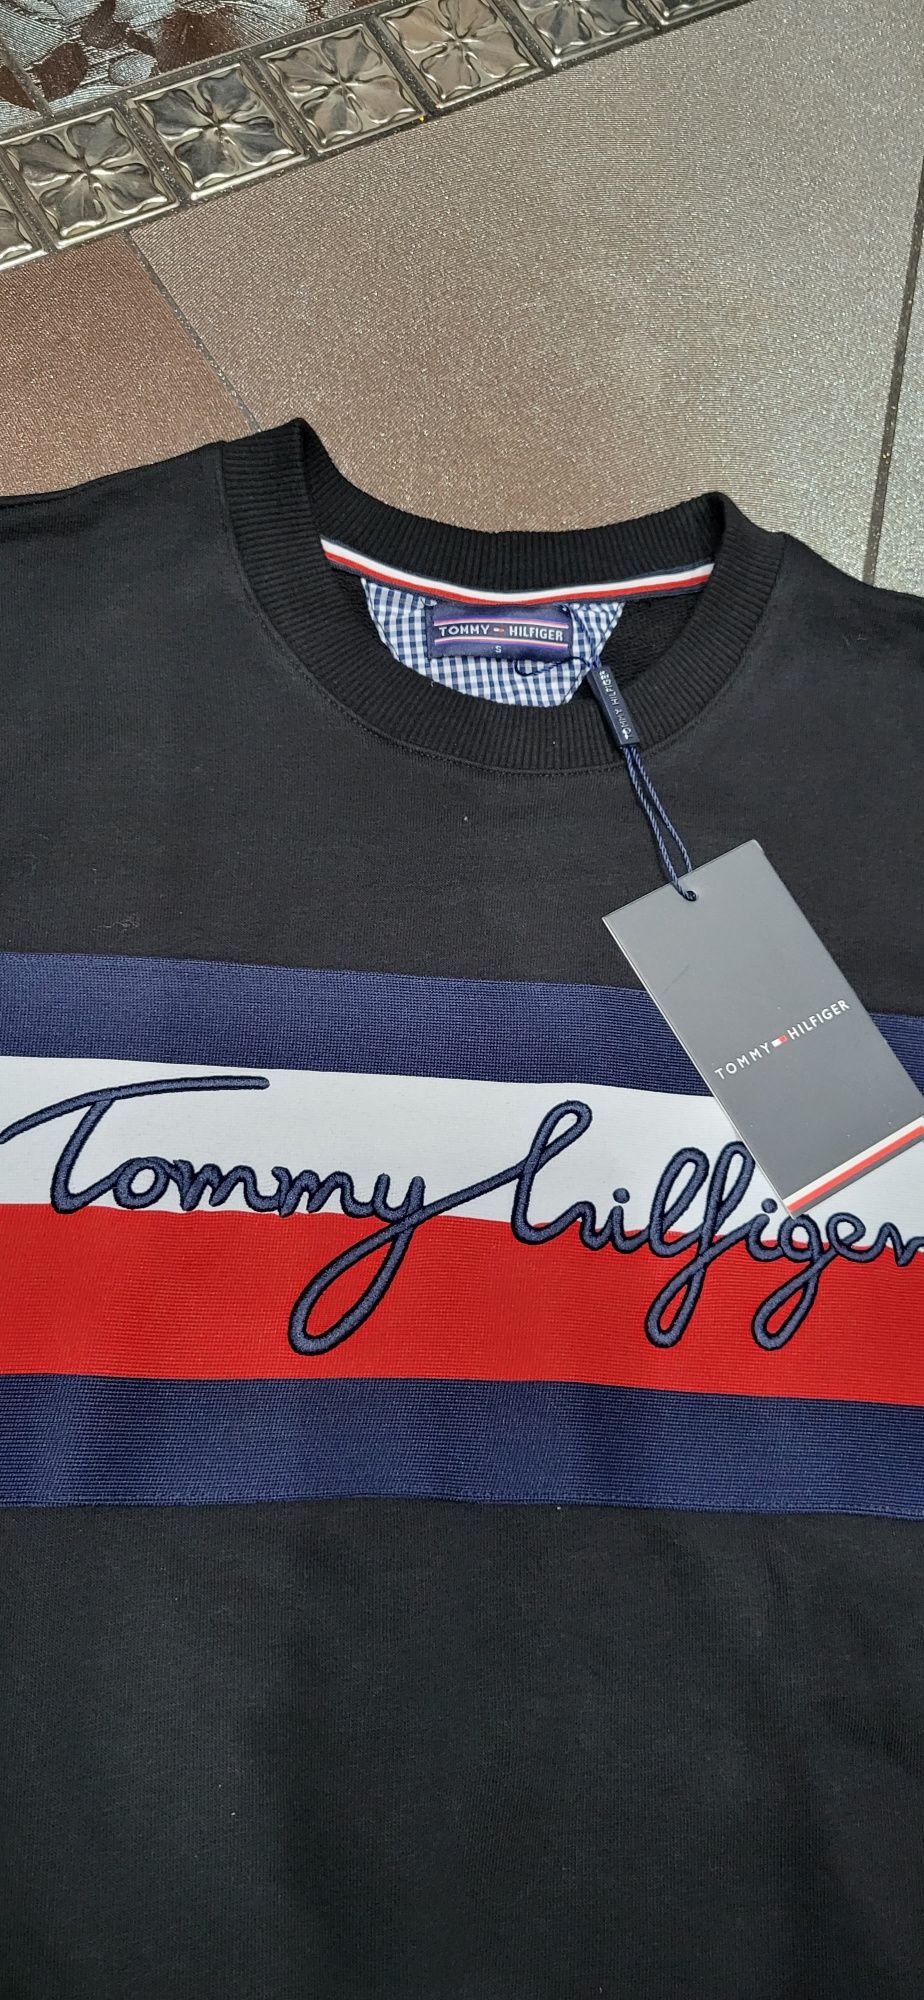 TH Tommy bluza dresowa męska unisex premium logo S M